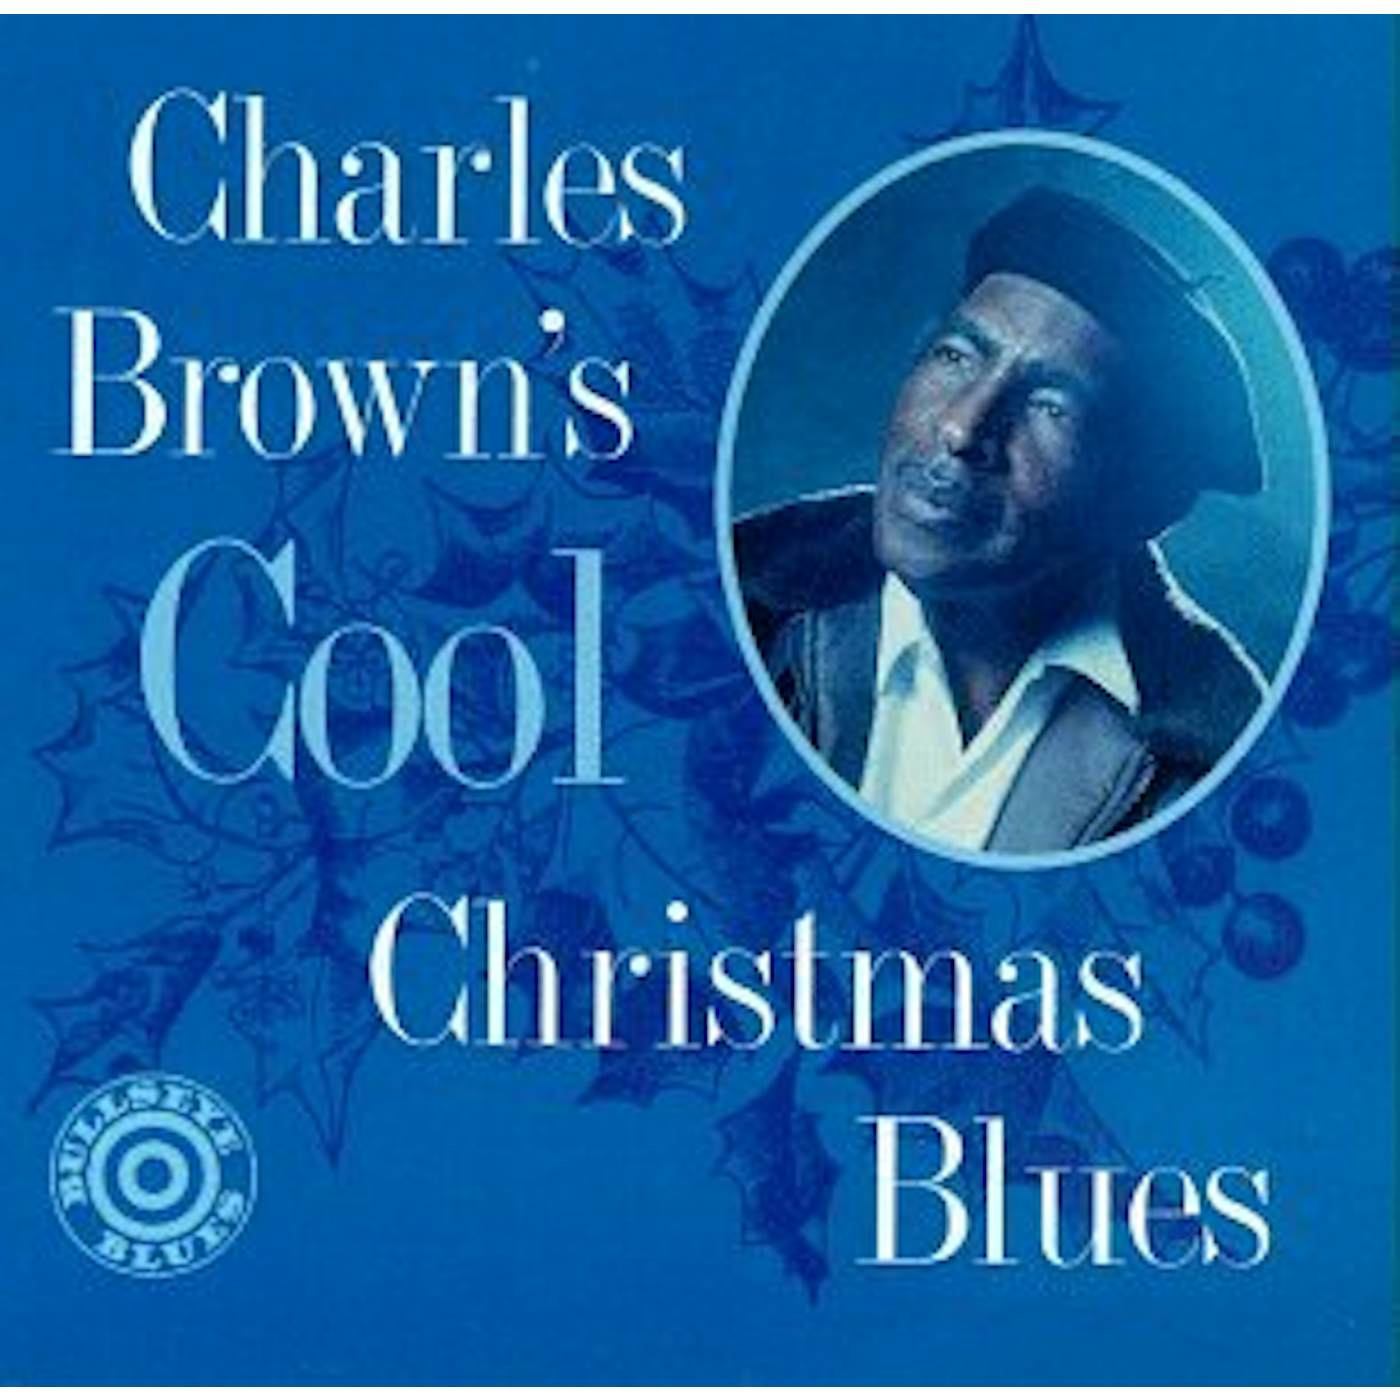 Charles Brown COOL CHRISTMAS BLUES CD